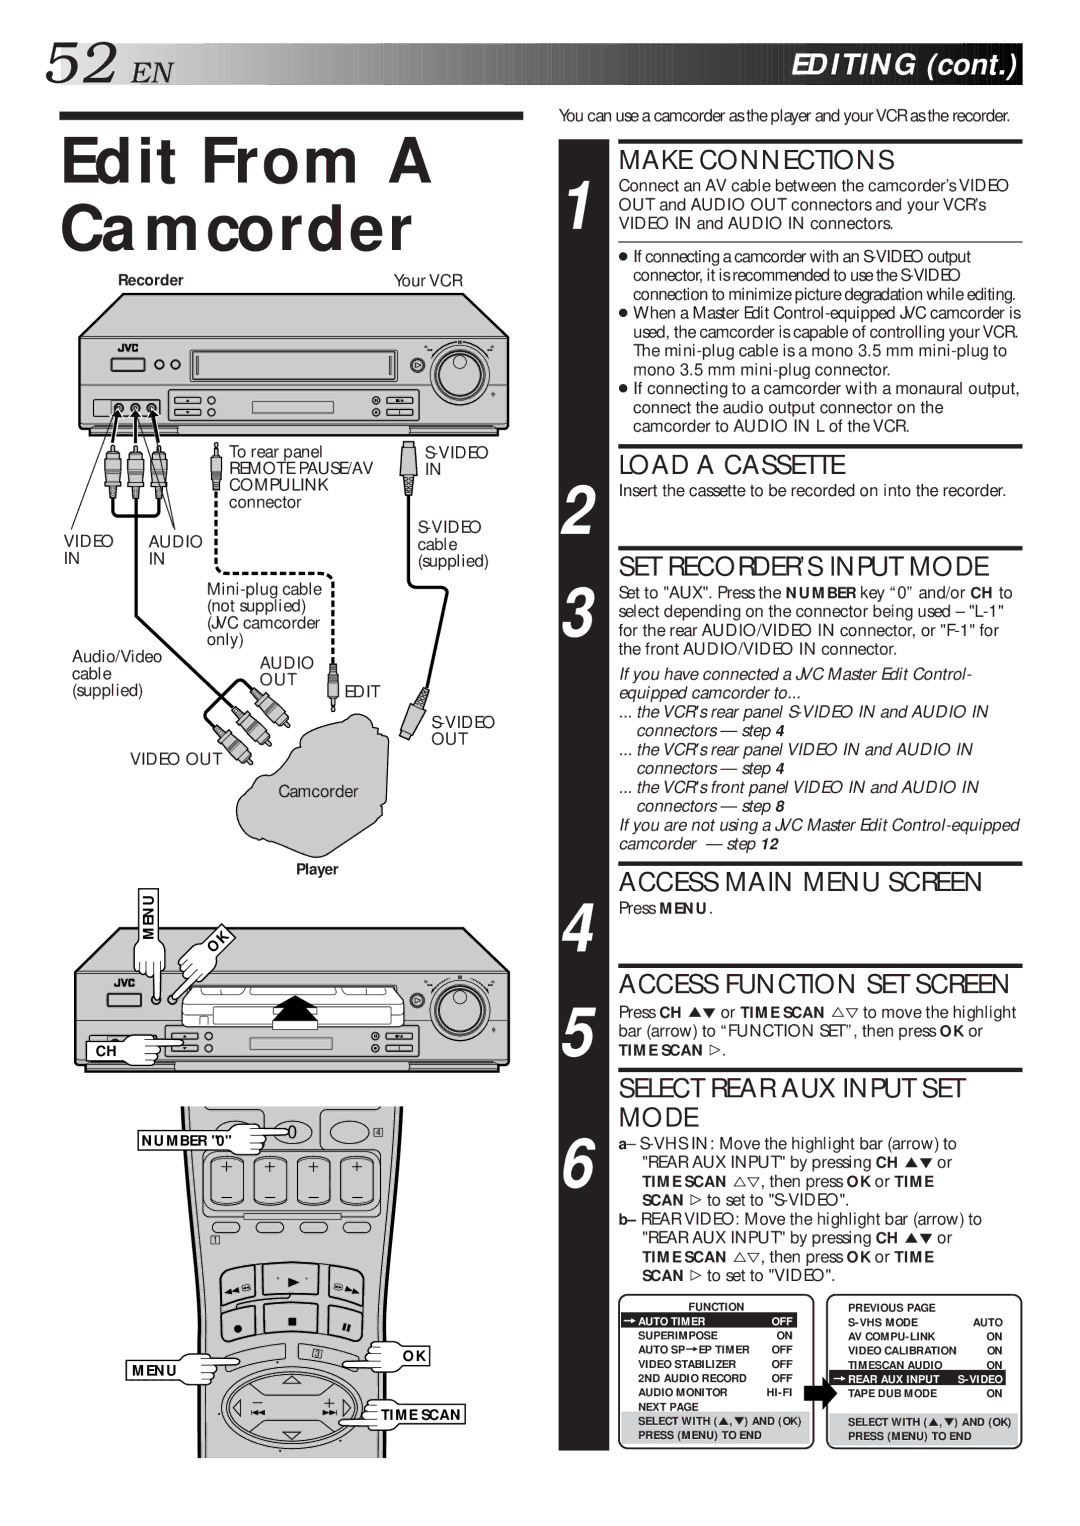 JVC HR-S4500U manual Edit From a Camcorder, Editing 